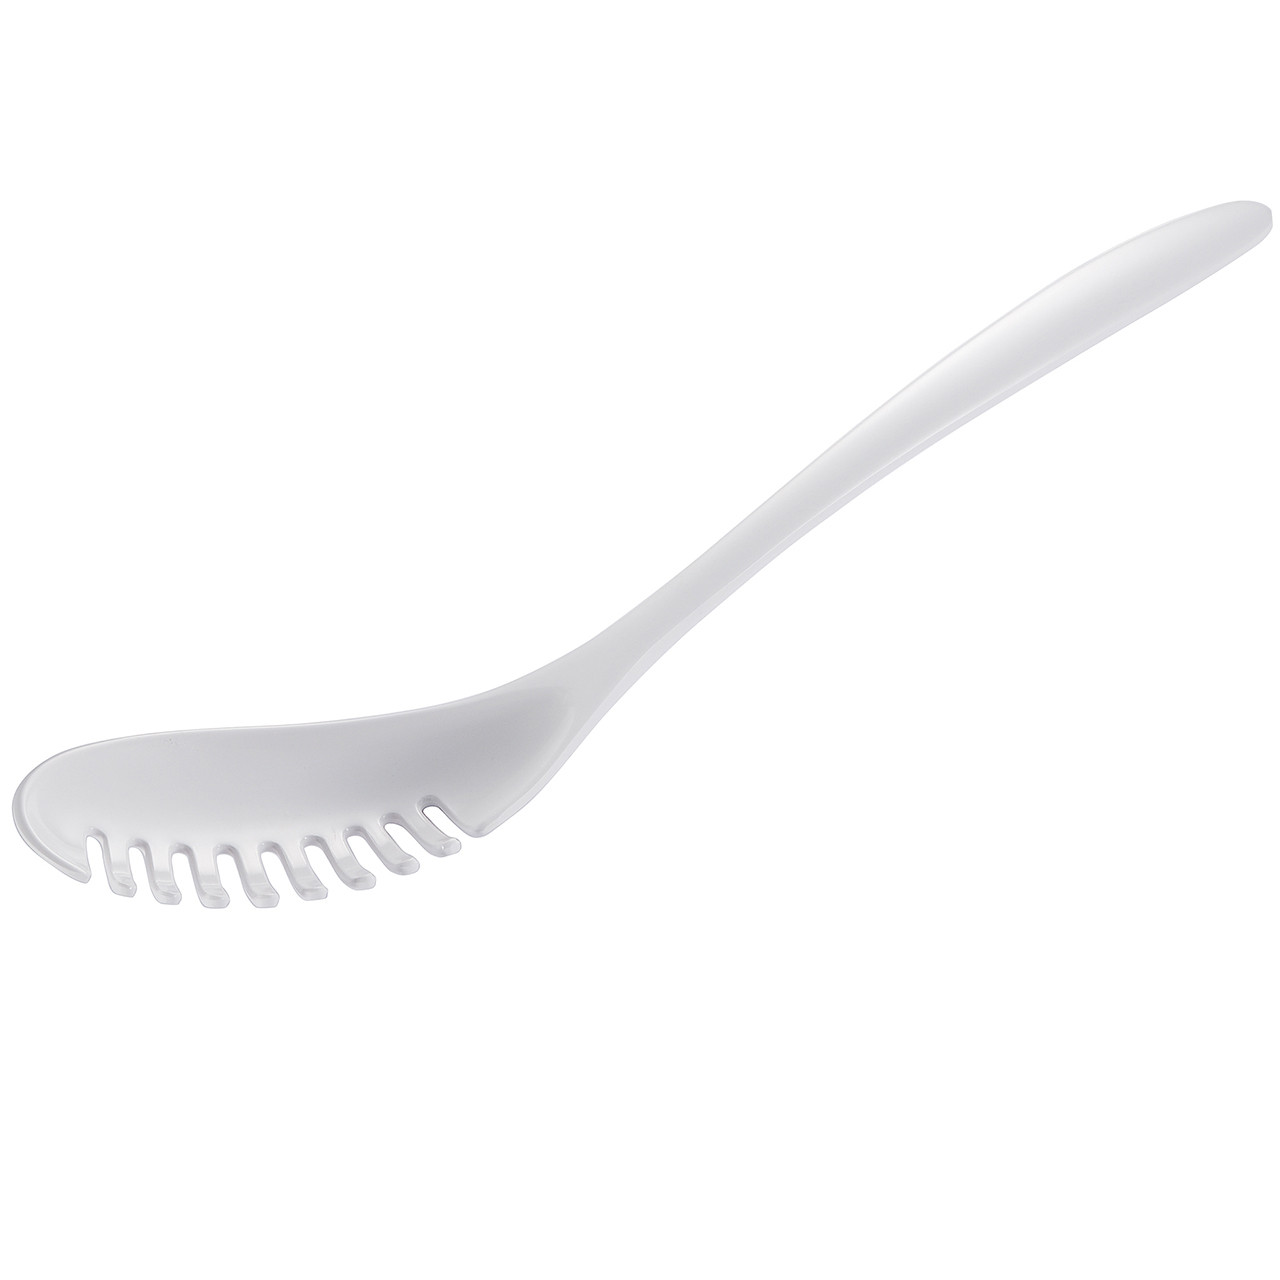 Melamine Pasta Spoon, 12.5 - Gourmac